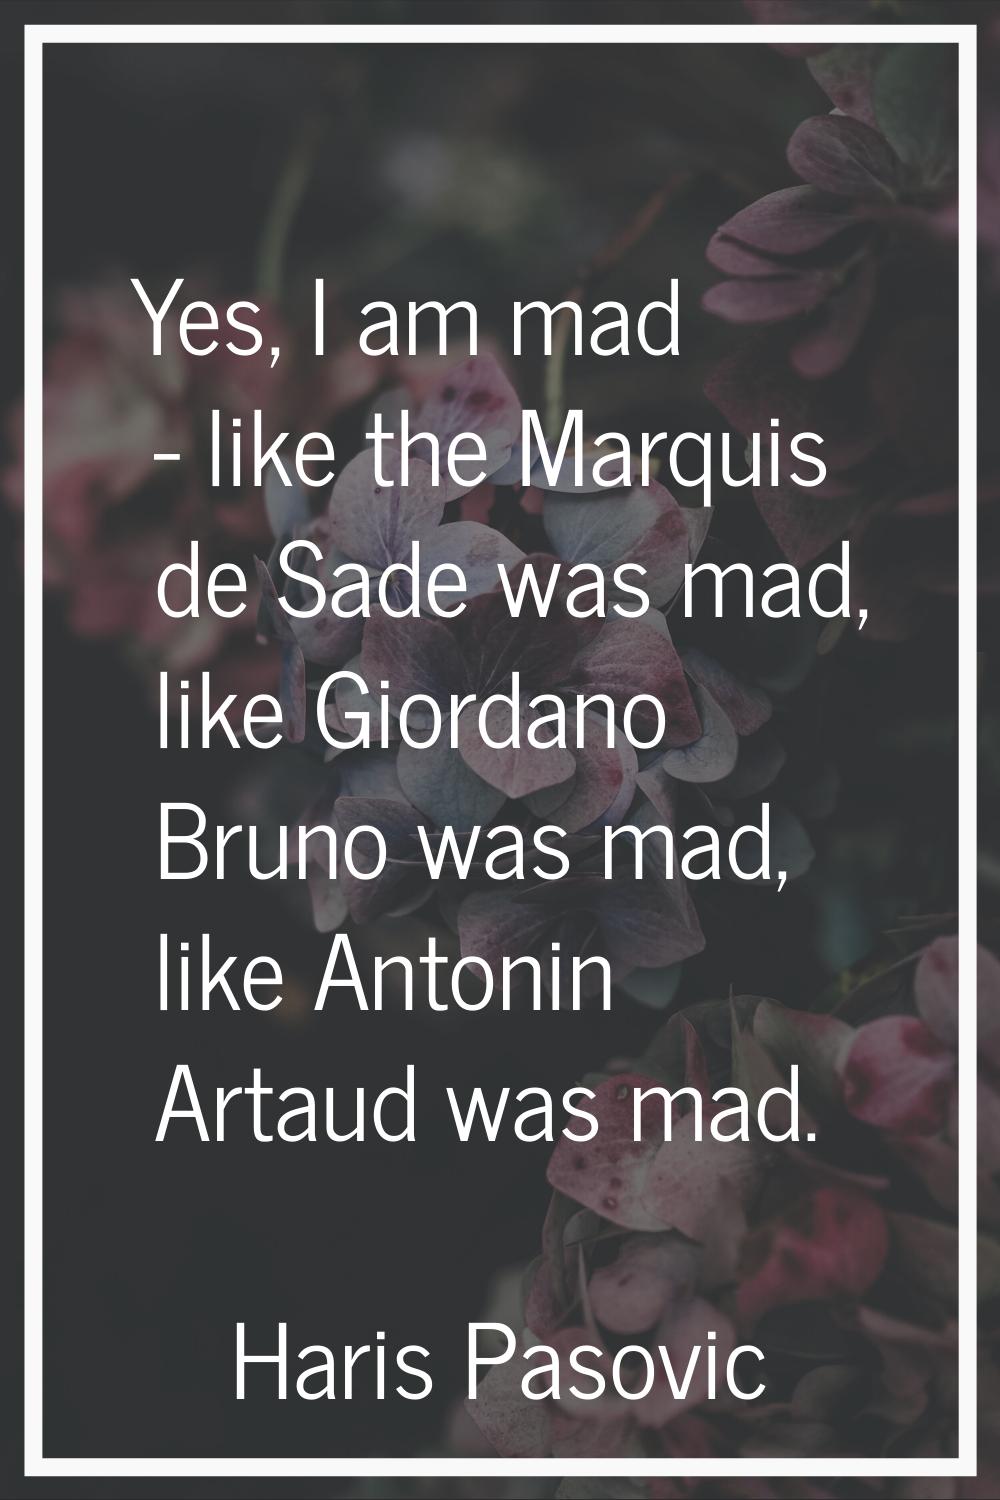 Yes, I am mad - like the Marquis de Sade was mad, like Giordano Bruno was mad, like Antonin Artaud 